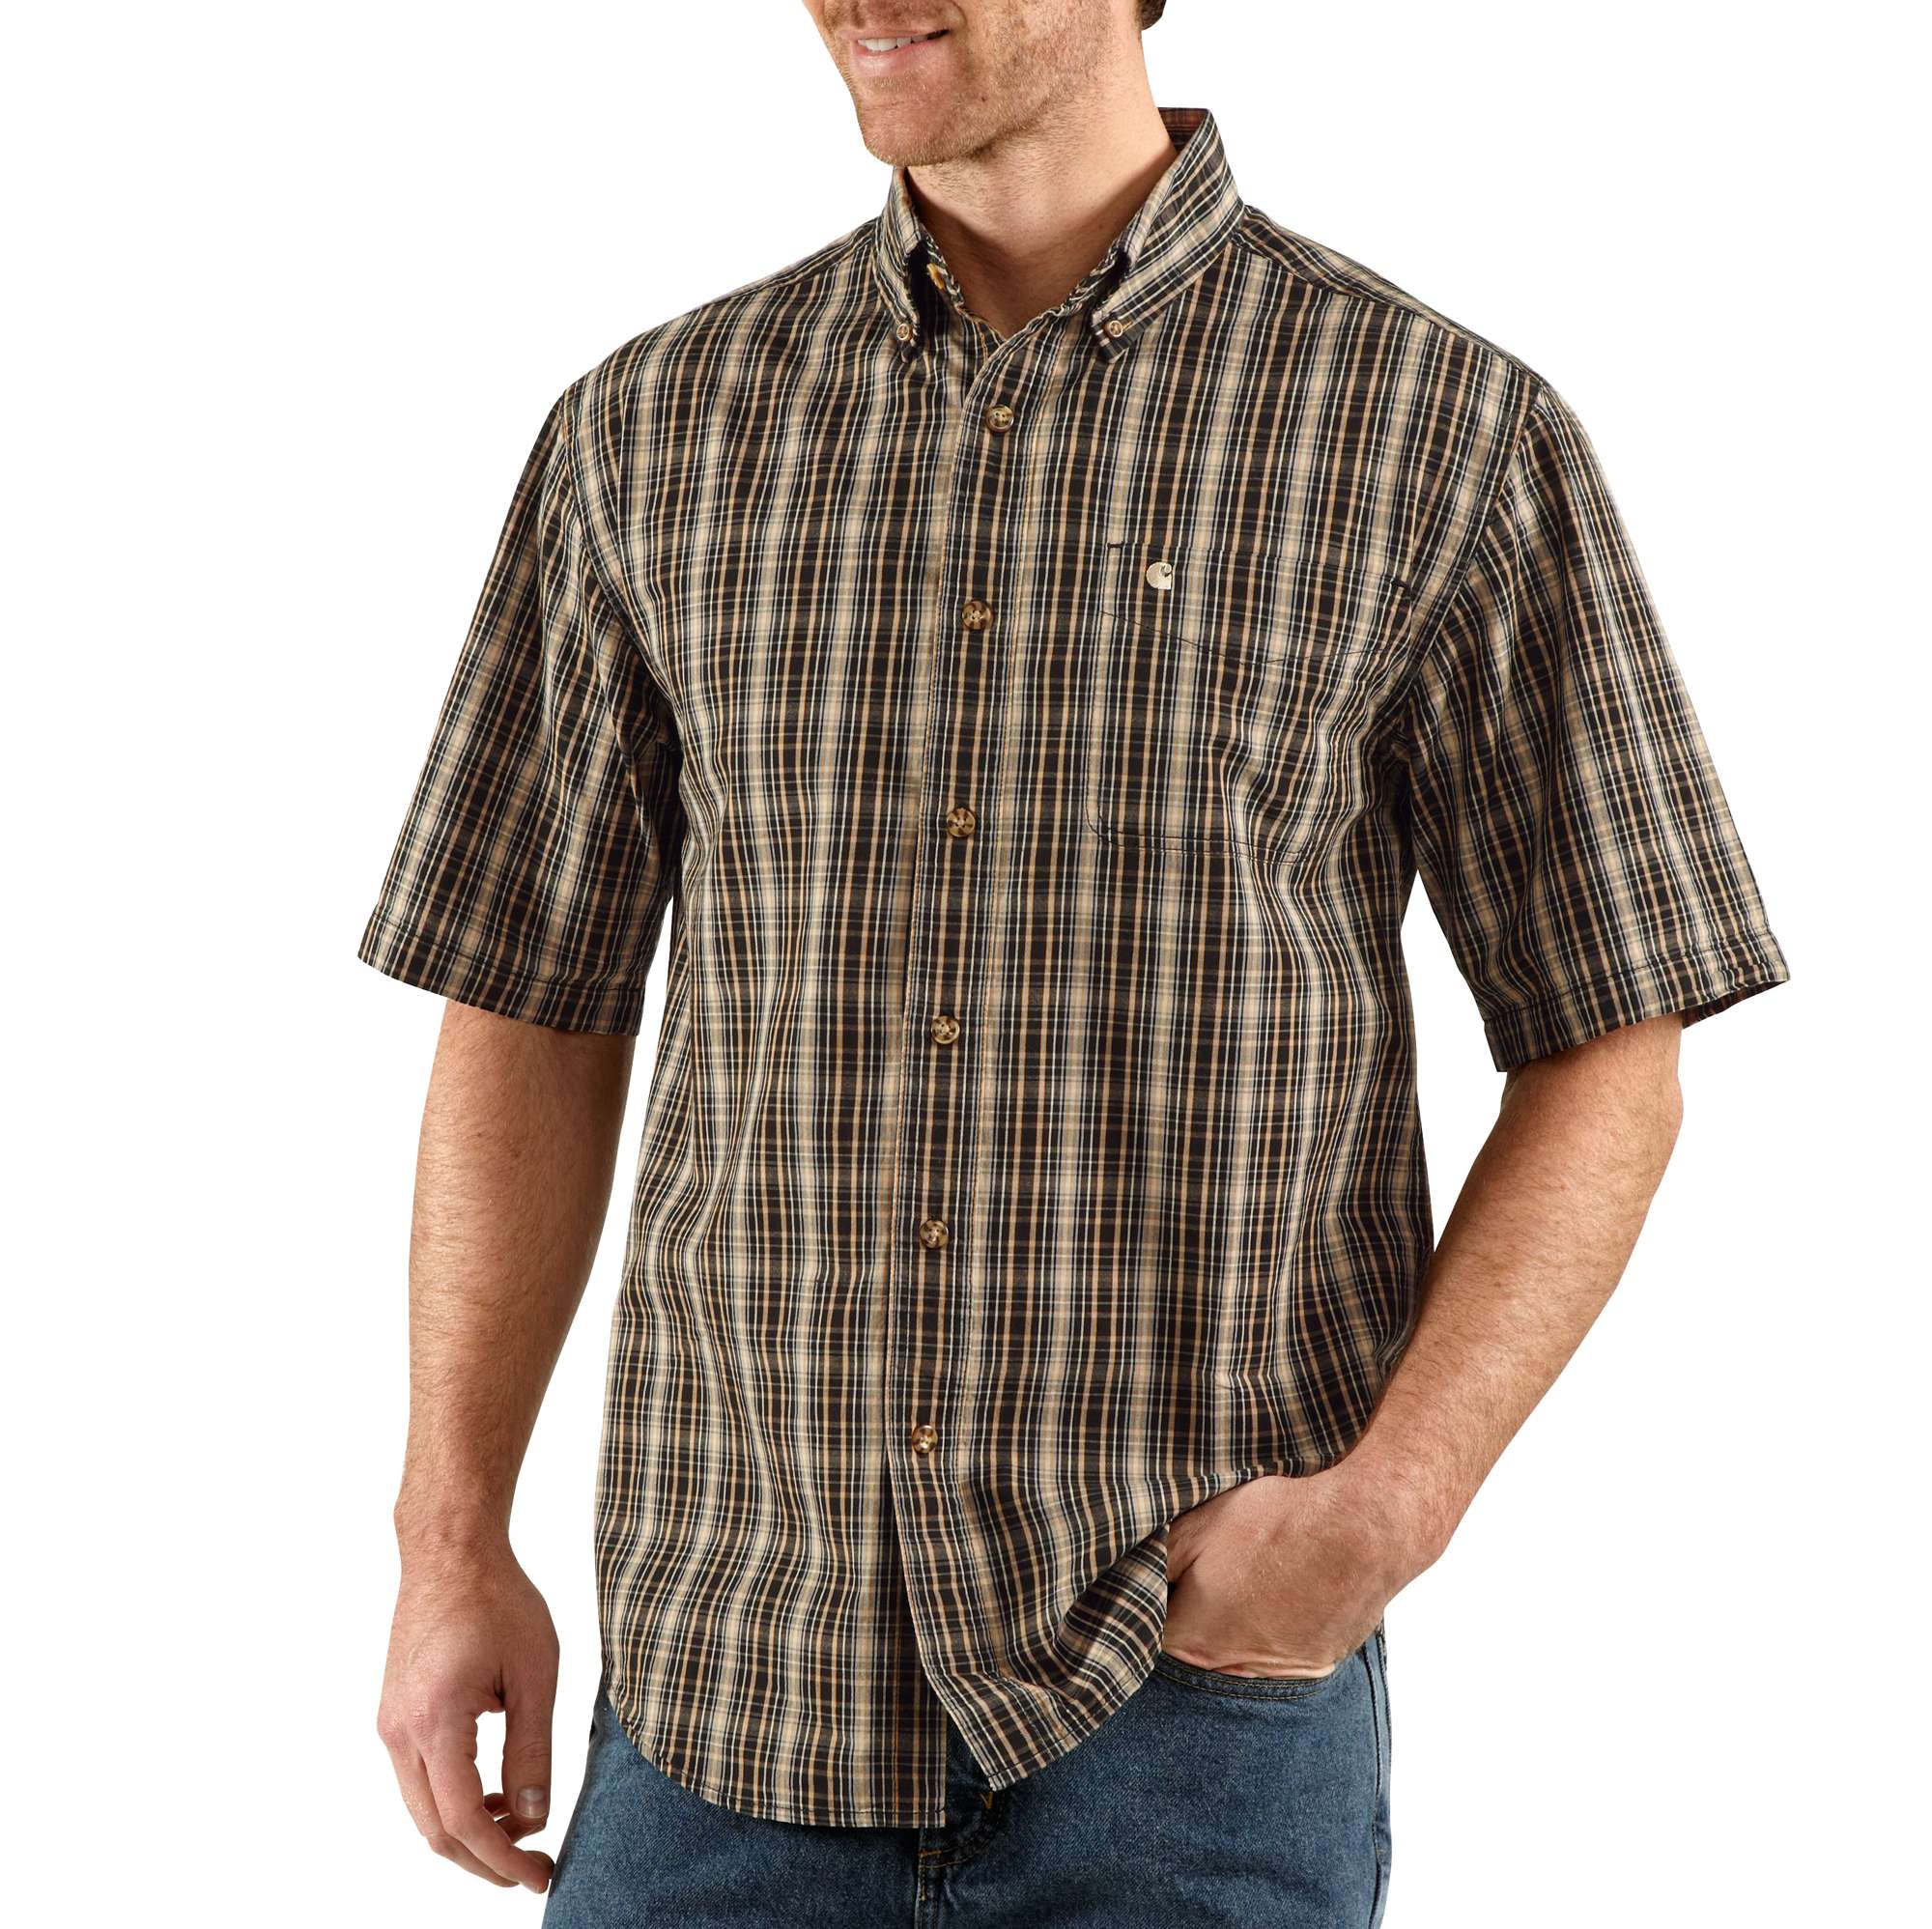 Men's Short-Sleeve Classic Plaid Shirt